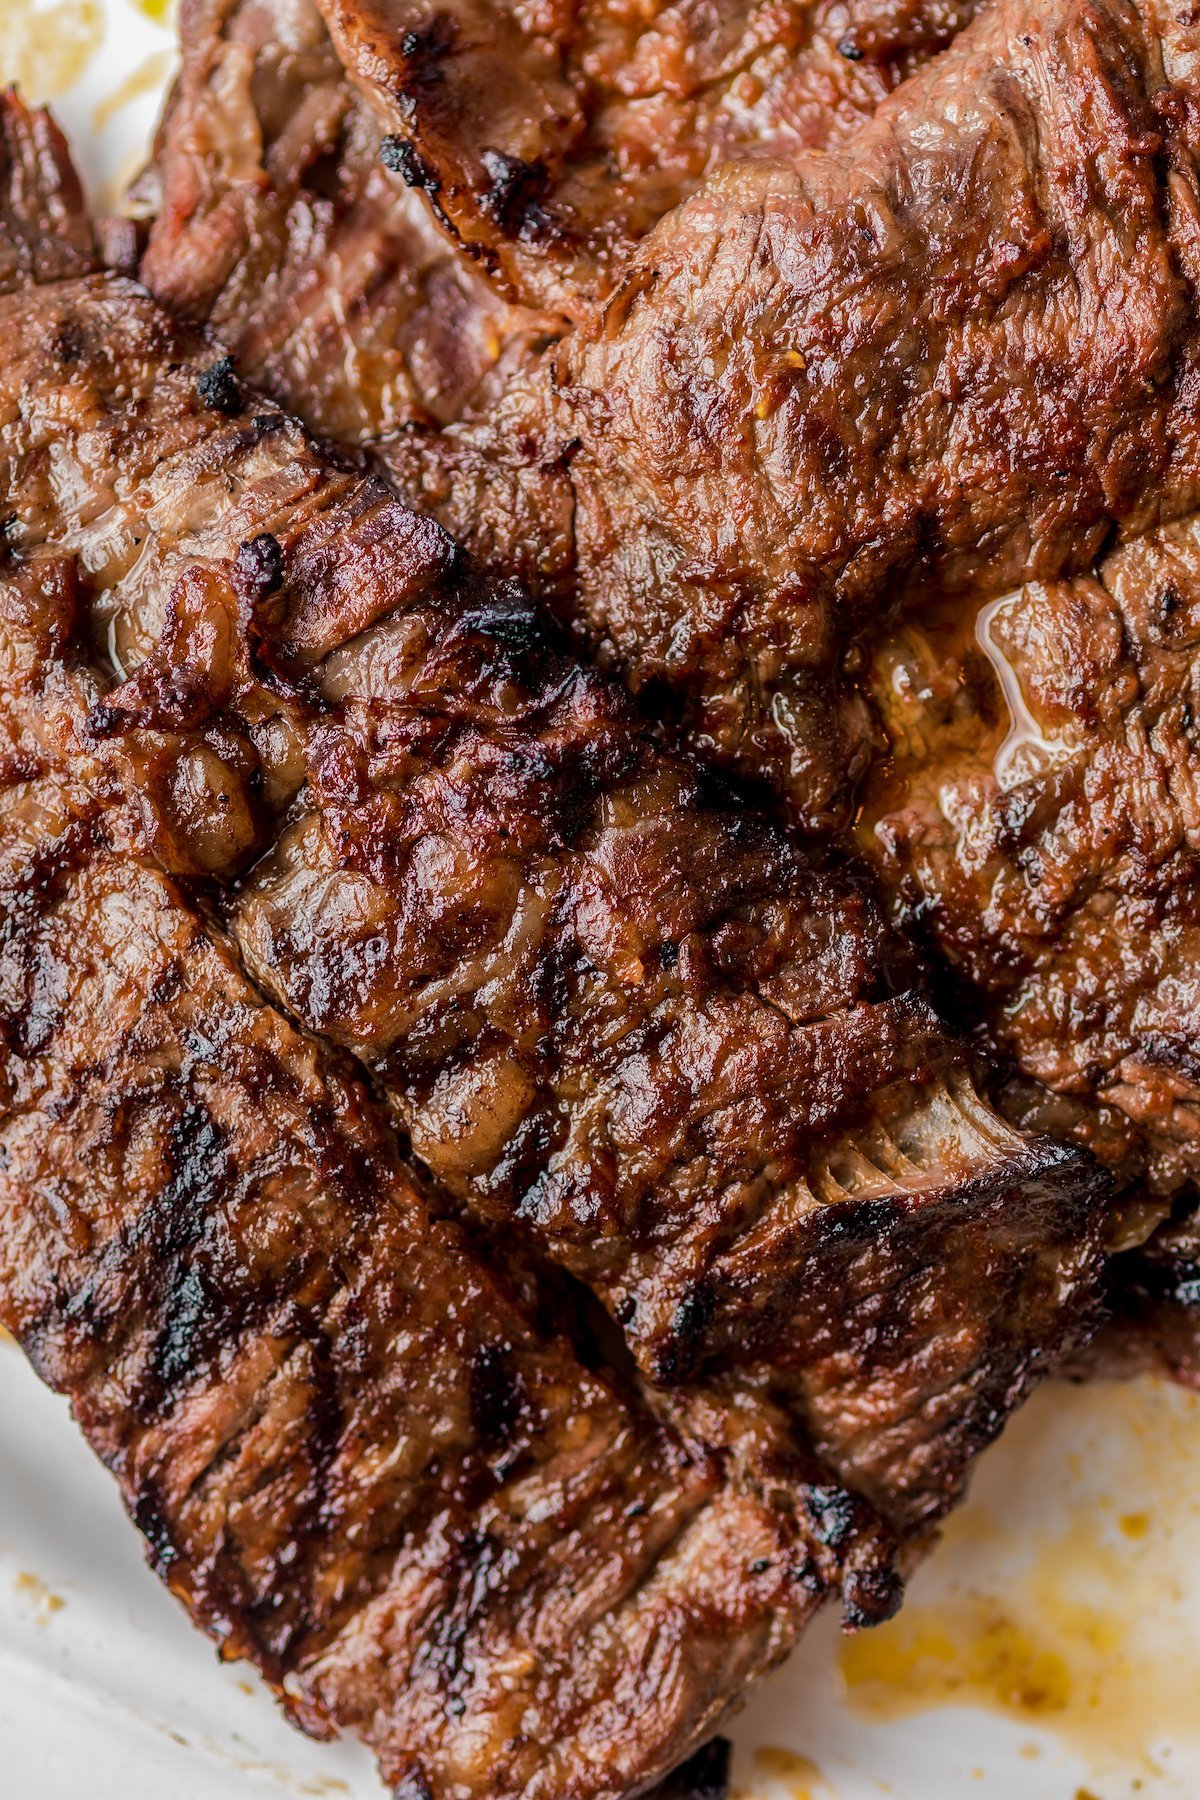 Slices of grilled steak.